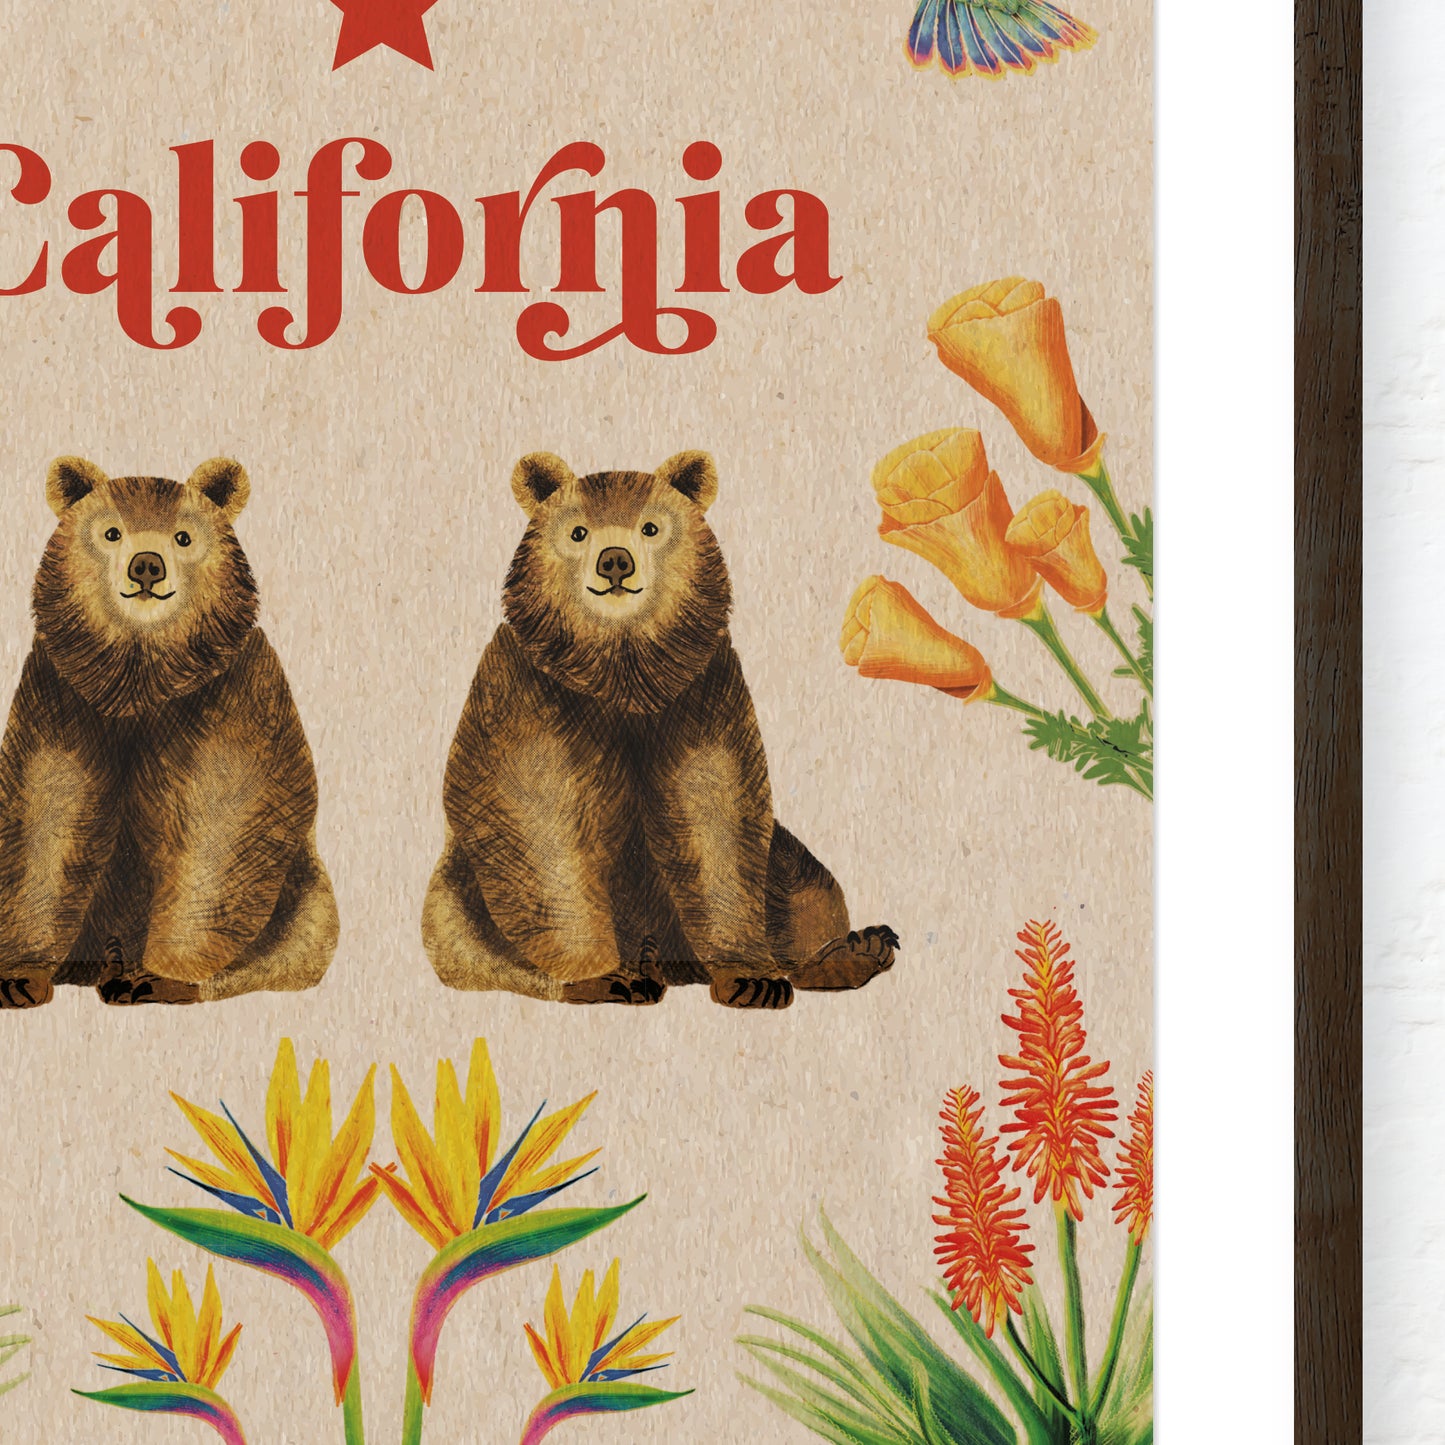 California Flora & Fauna Art Print